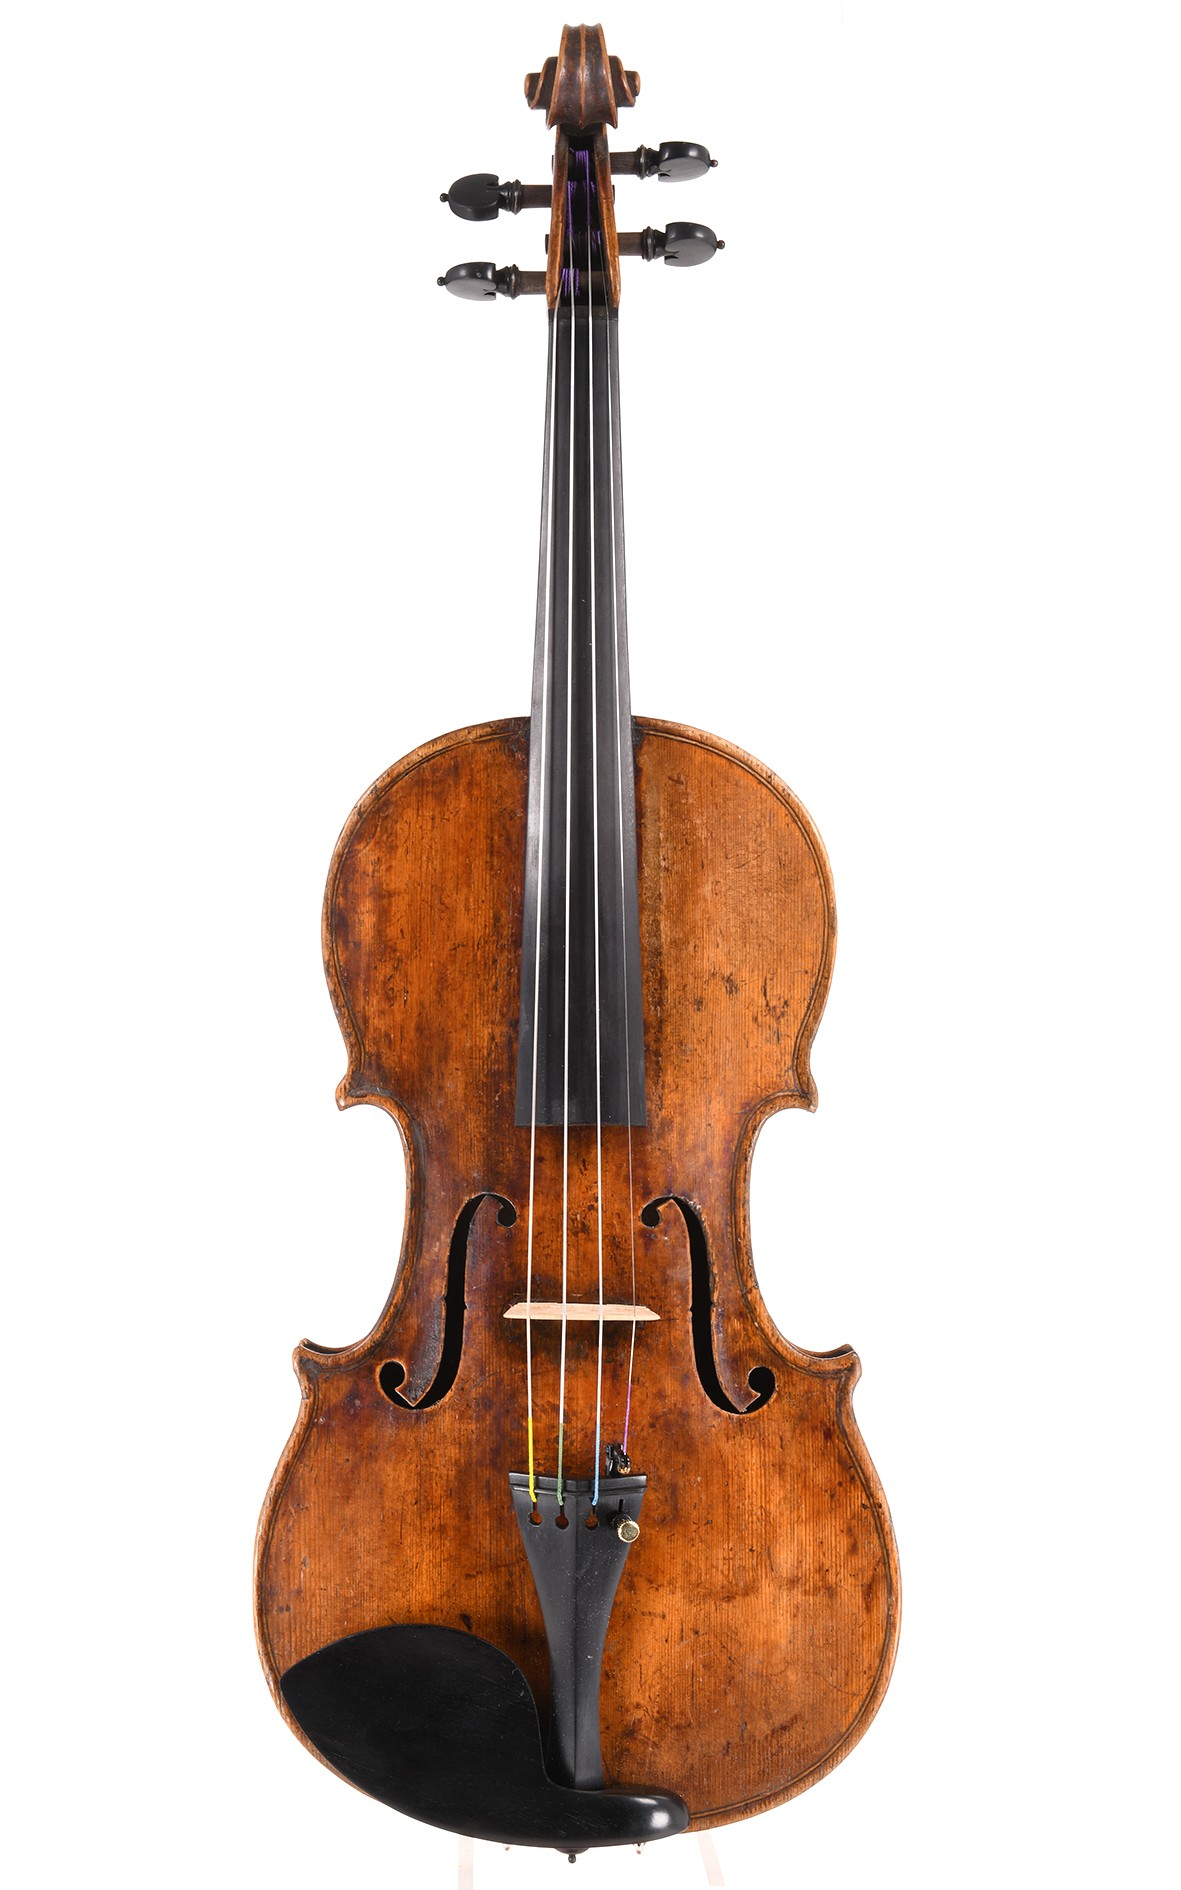 French master violin, circa 1830 - Blaise family